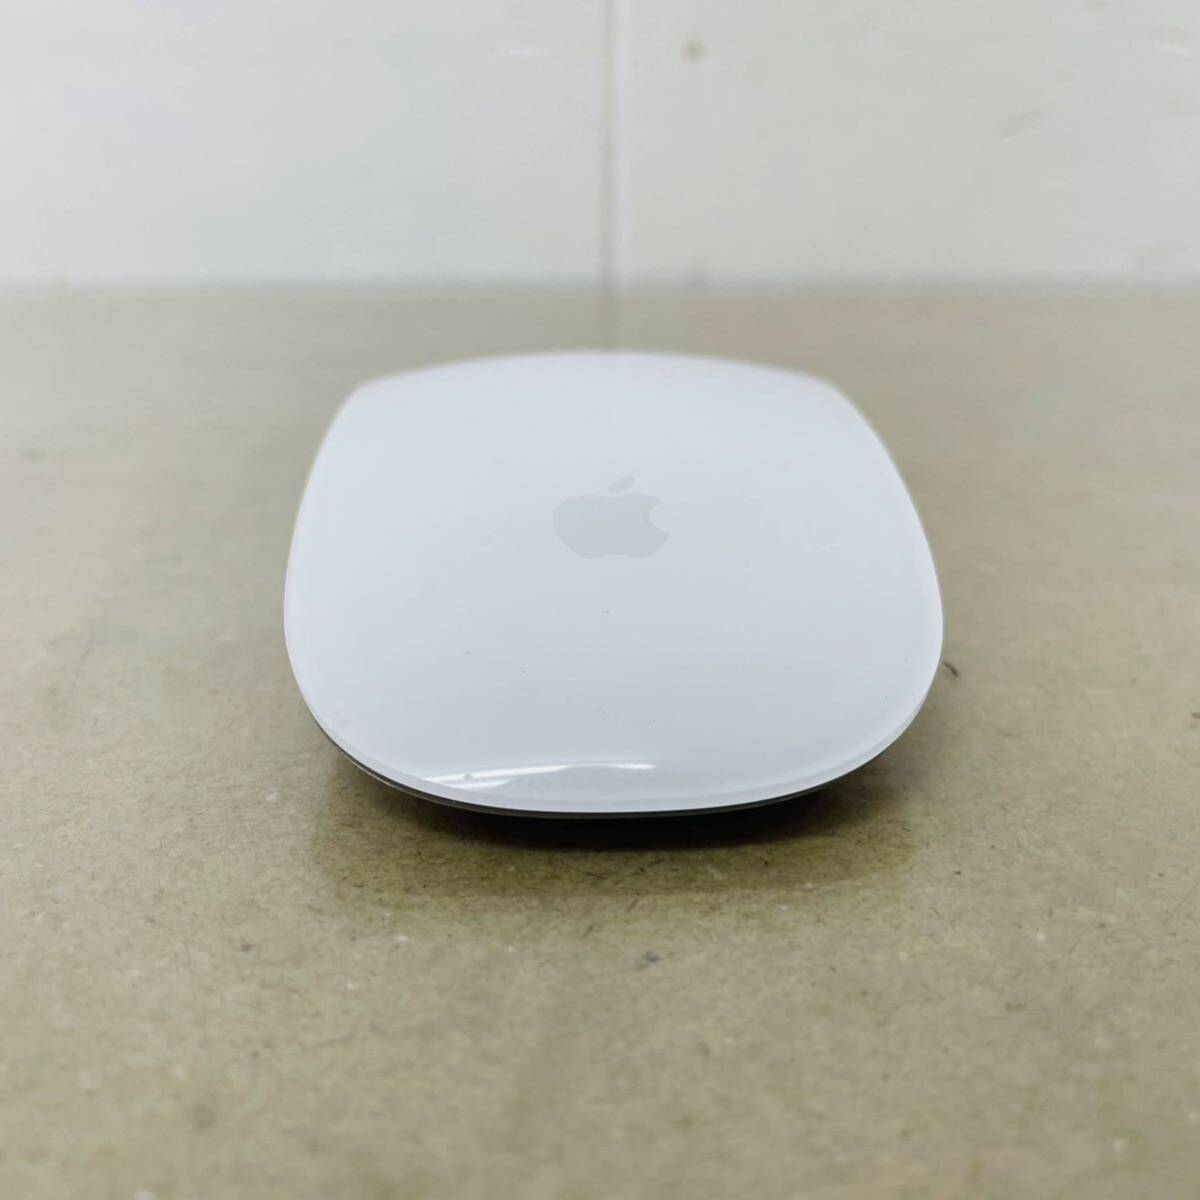  Apple Magic Mouse 2 MLA02J/A 目立つ傷汚れなし 動作確認済 i17933 コンパクト発送の画像7